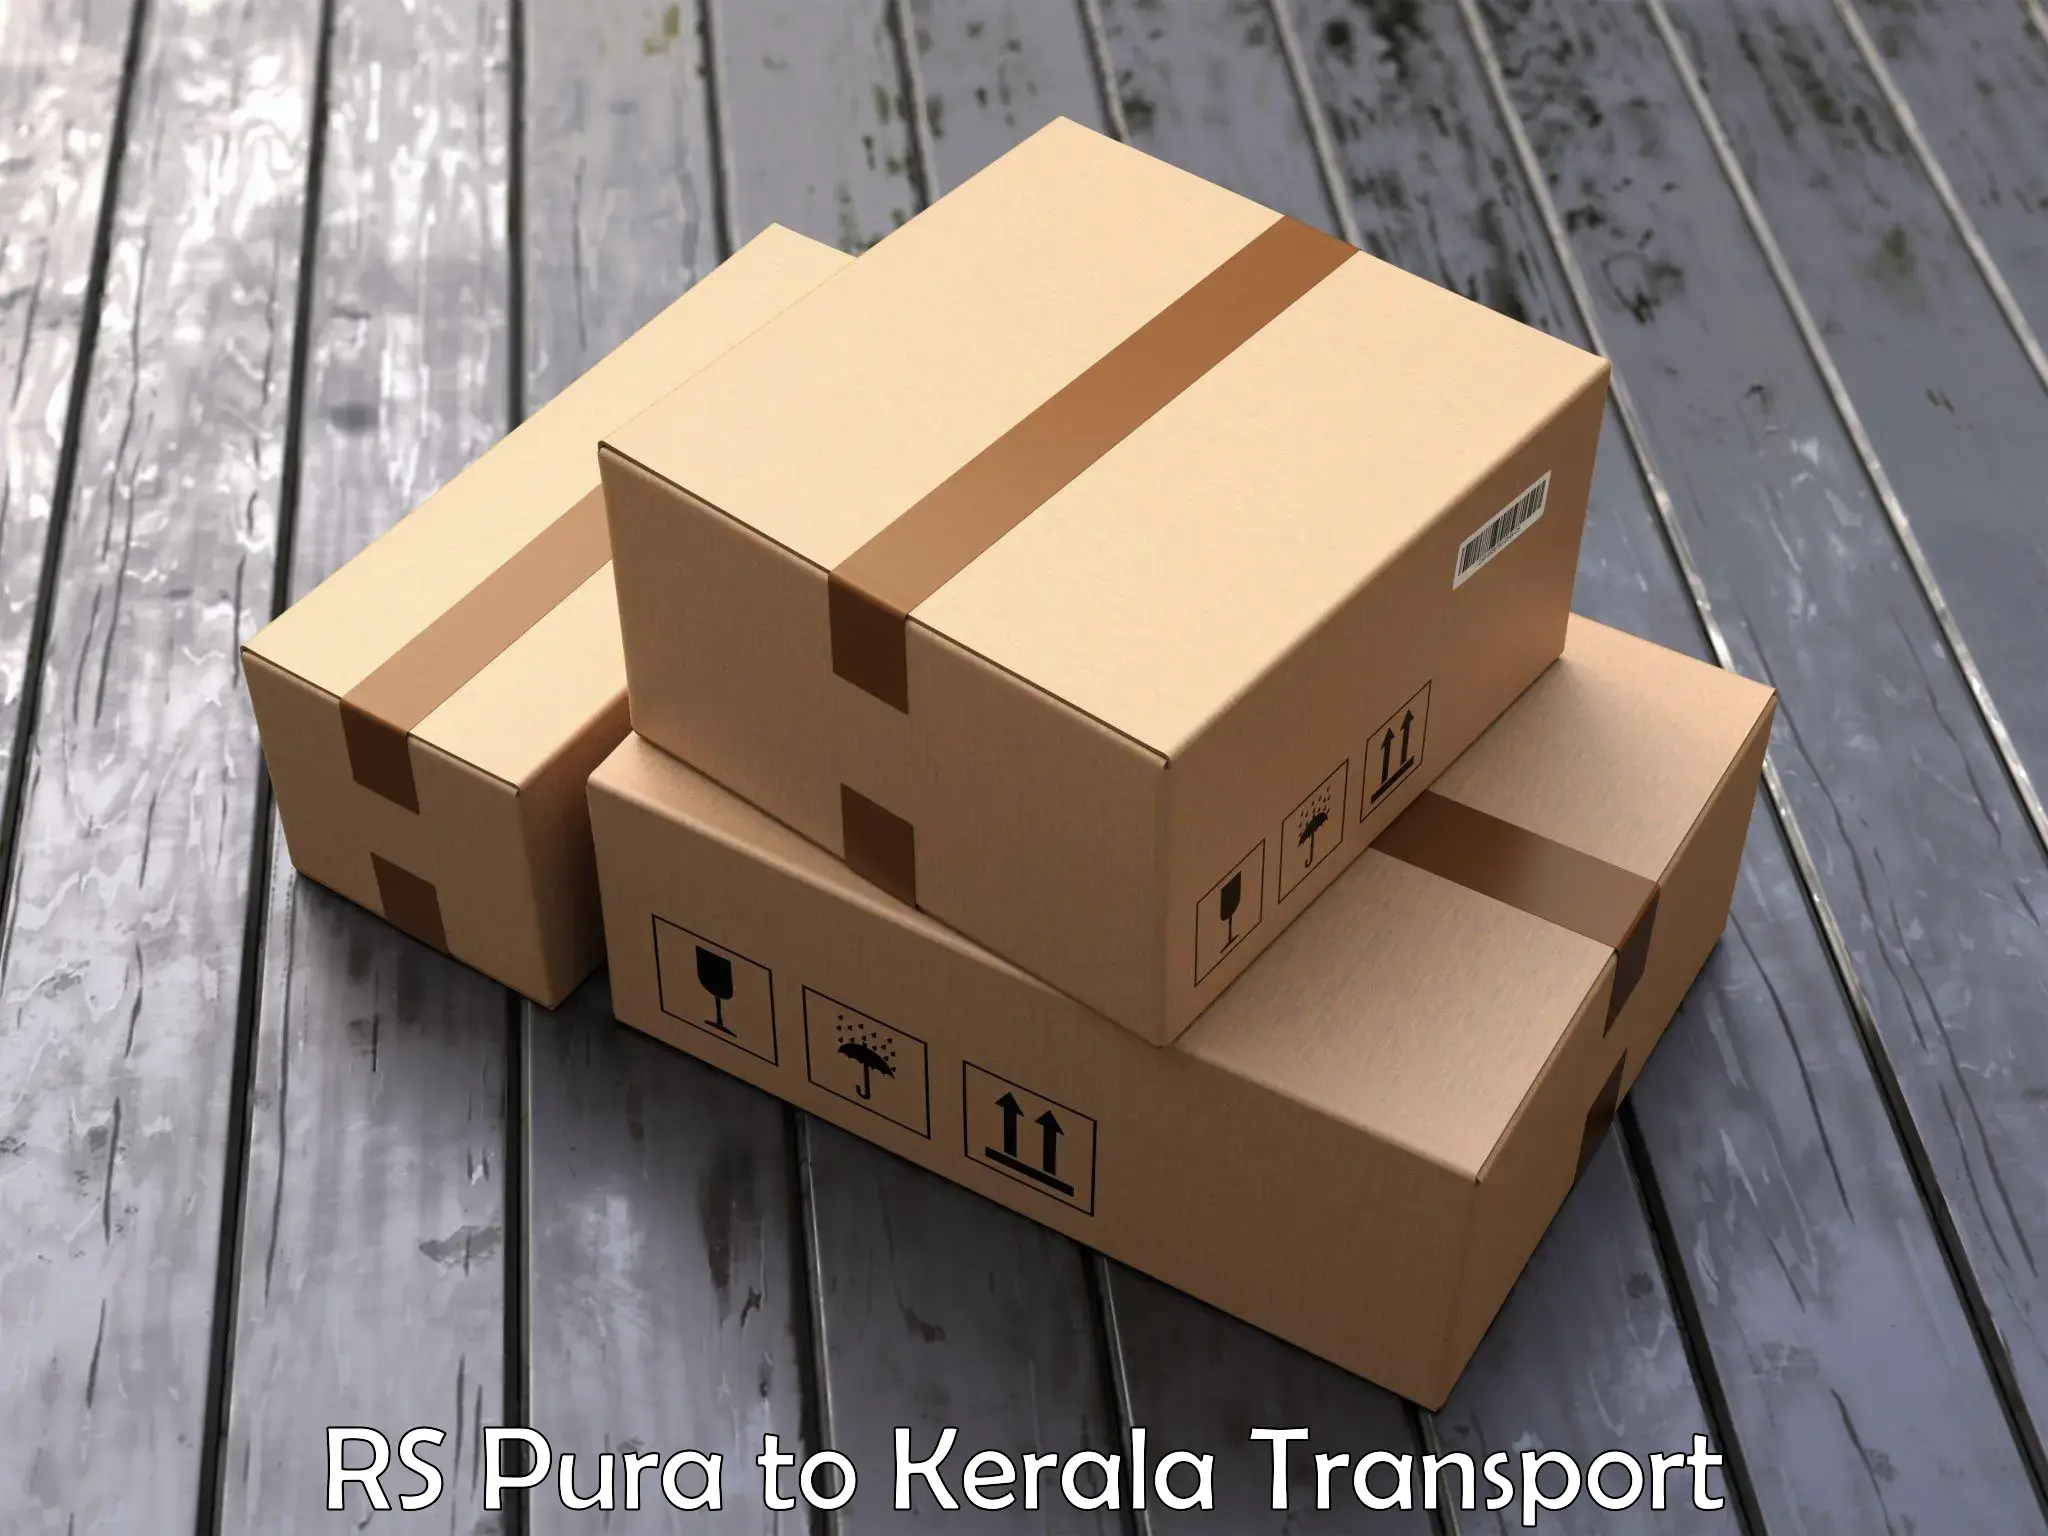 Cycle transportation service RS Pura to Kerala